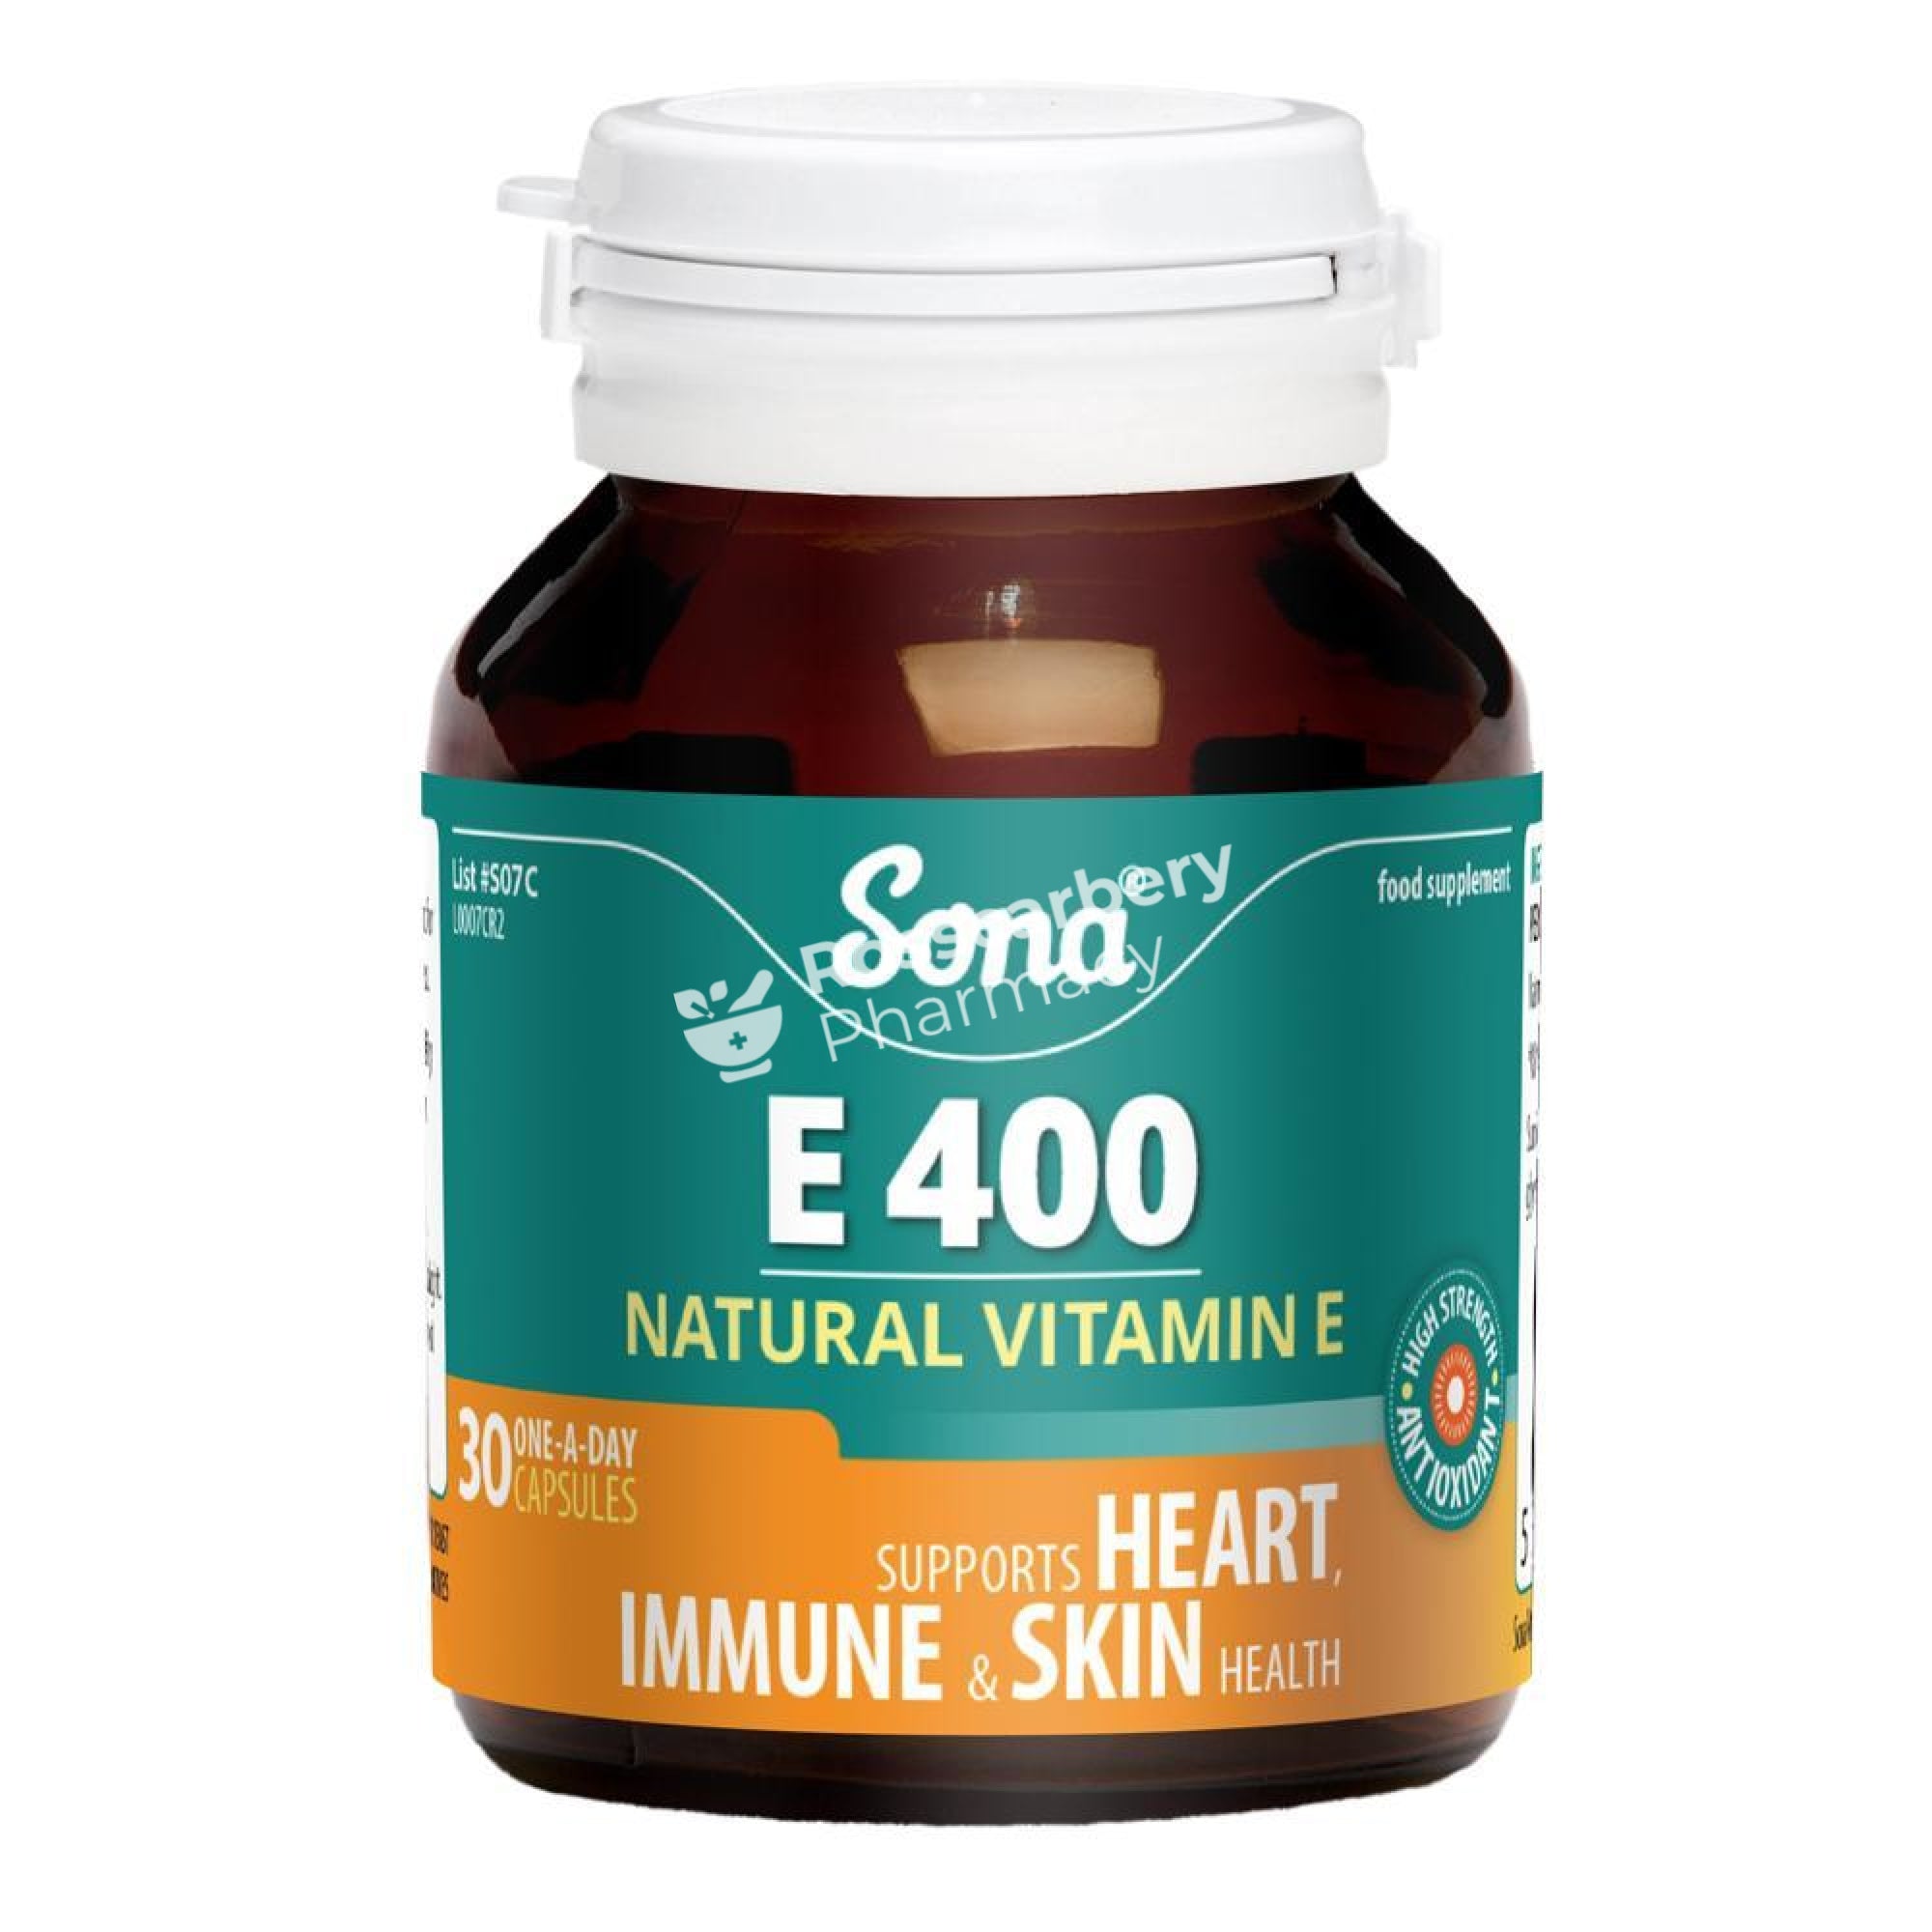 Sona - E 400 Natural Vitamin One-A-Day Skin Hair & Nails